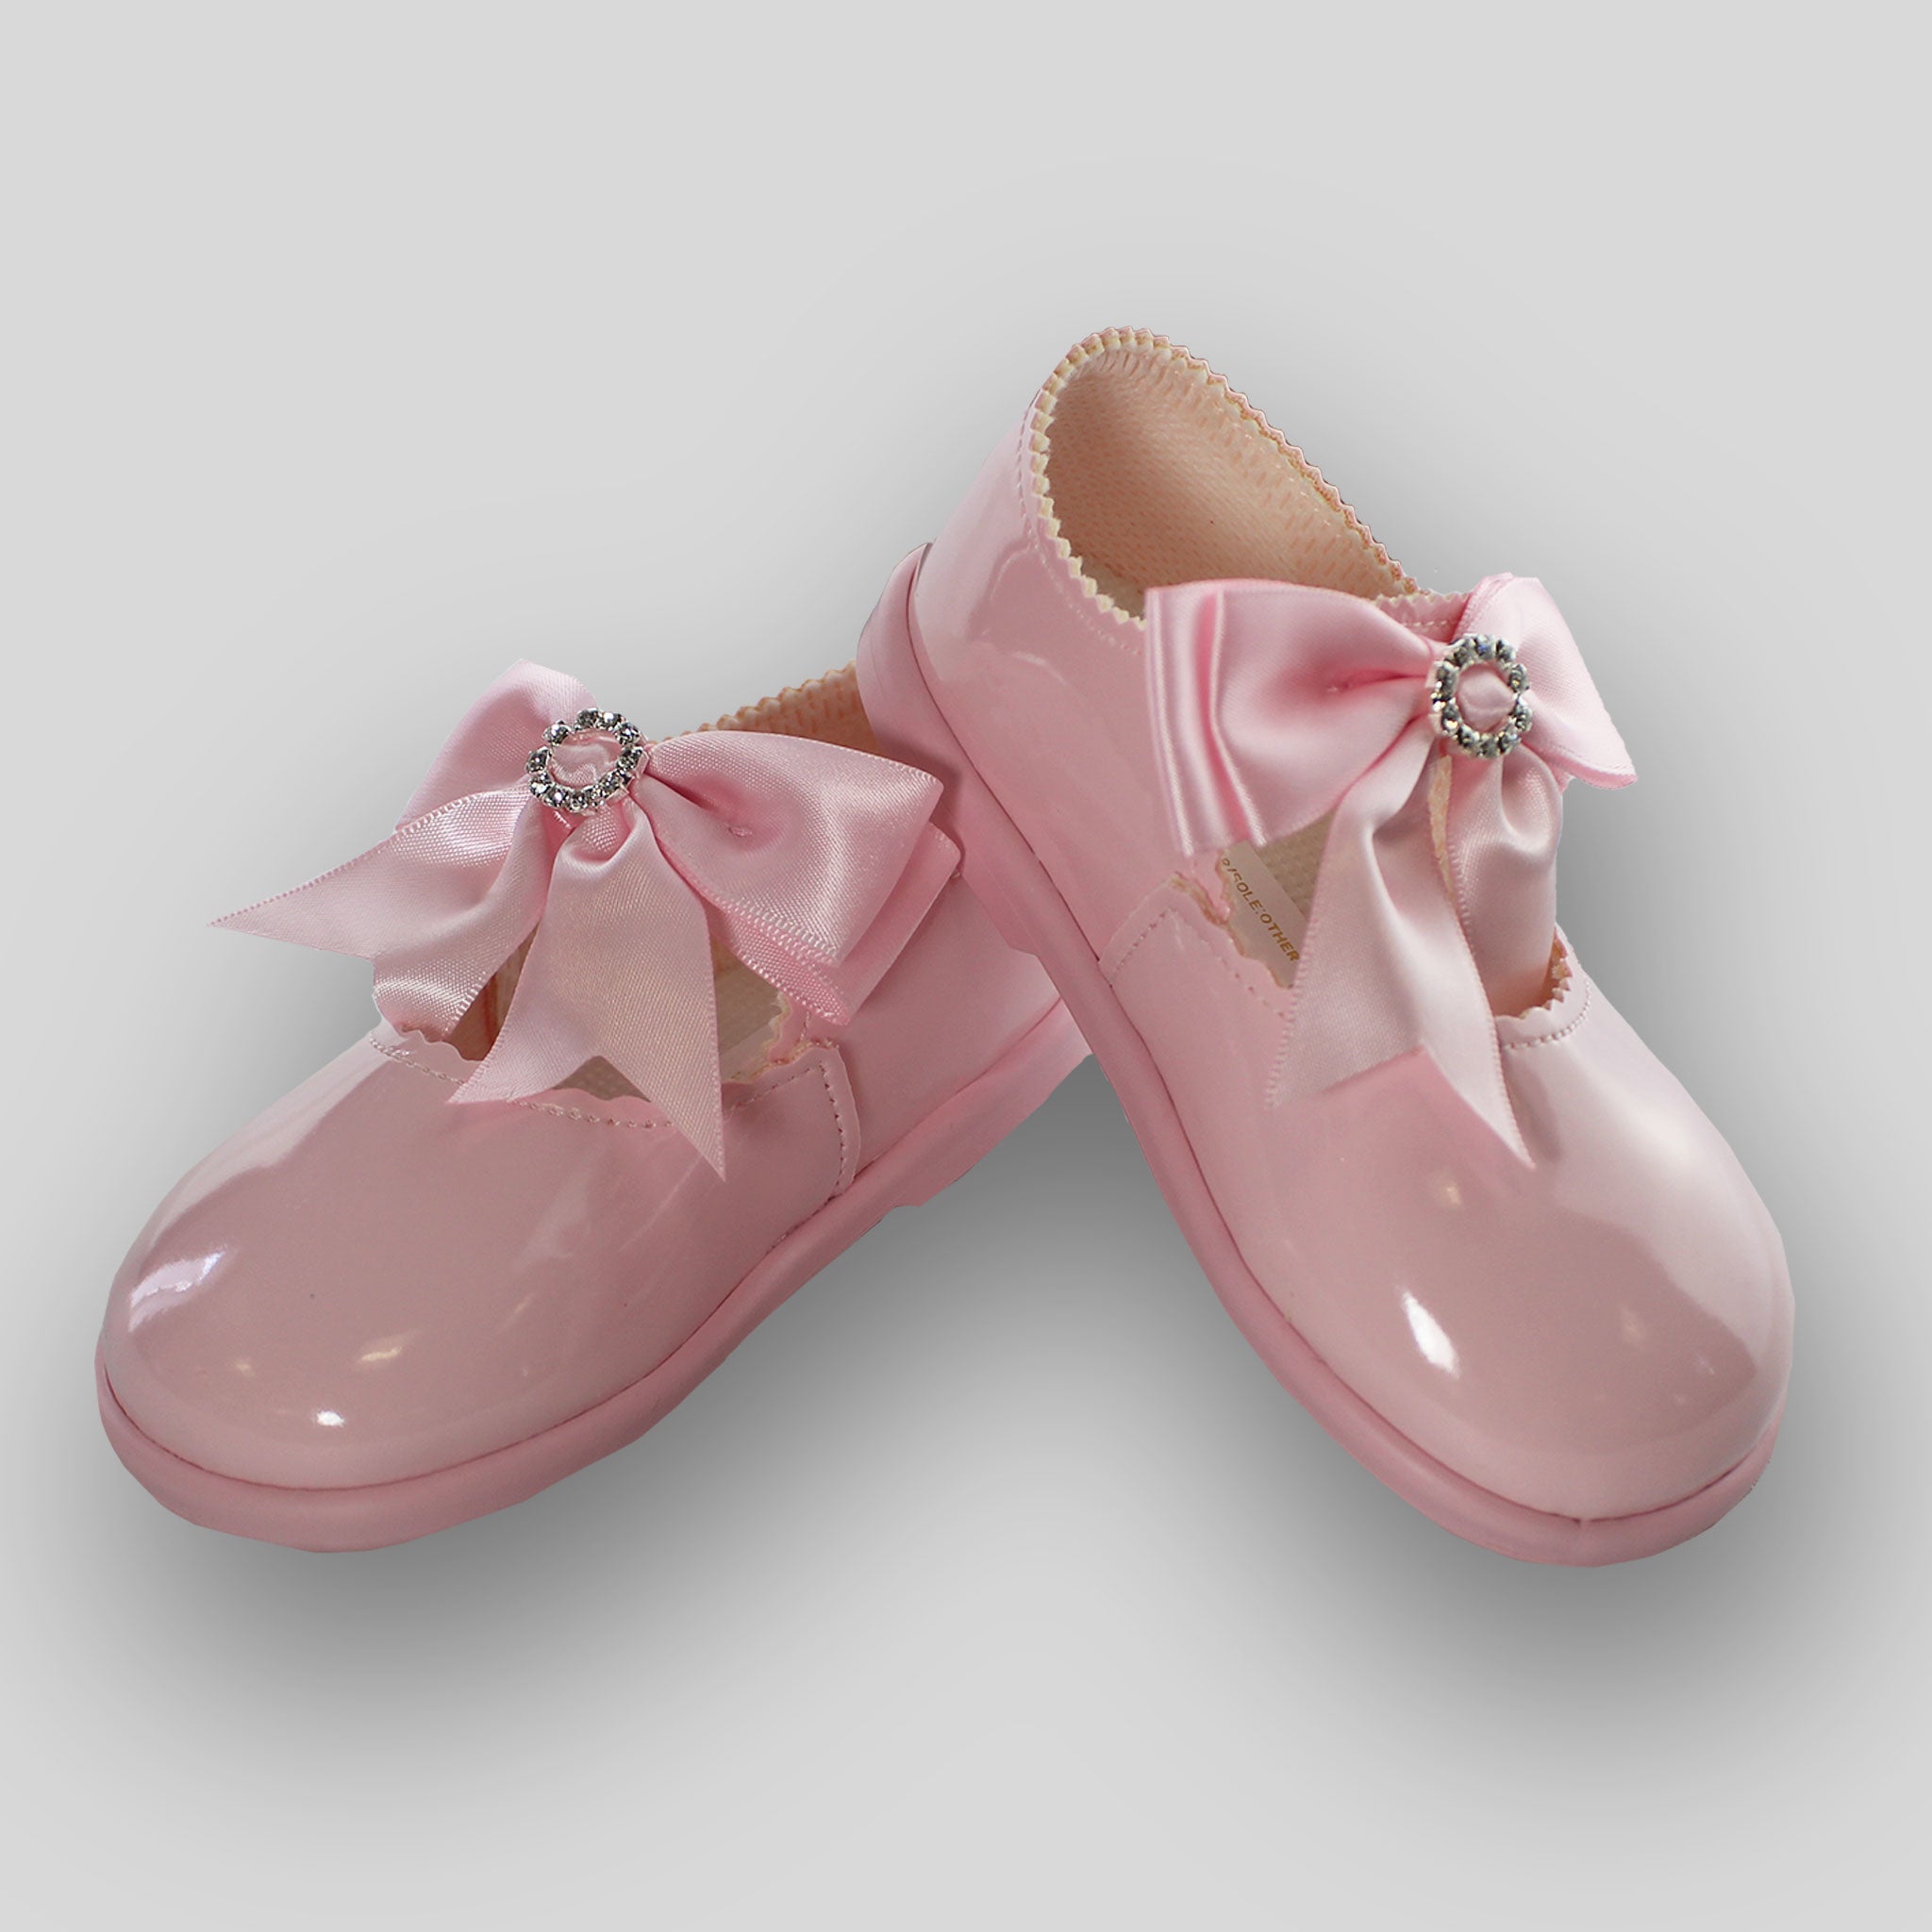 pink baypod first walker shoes